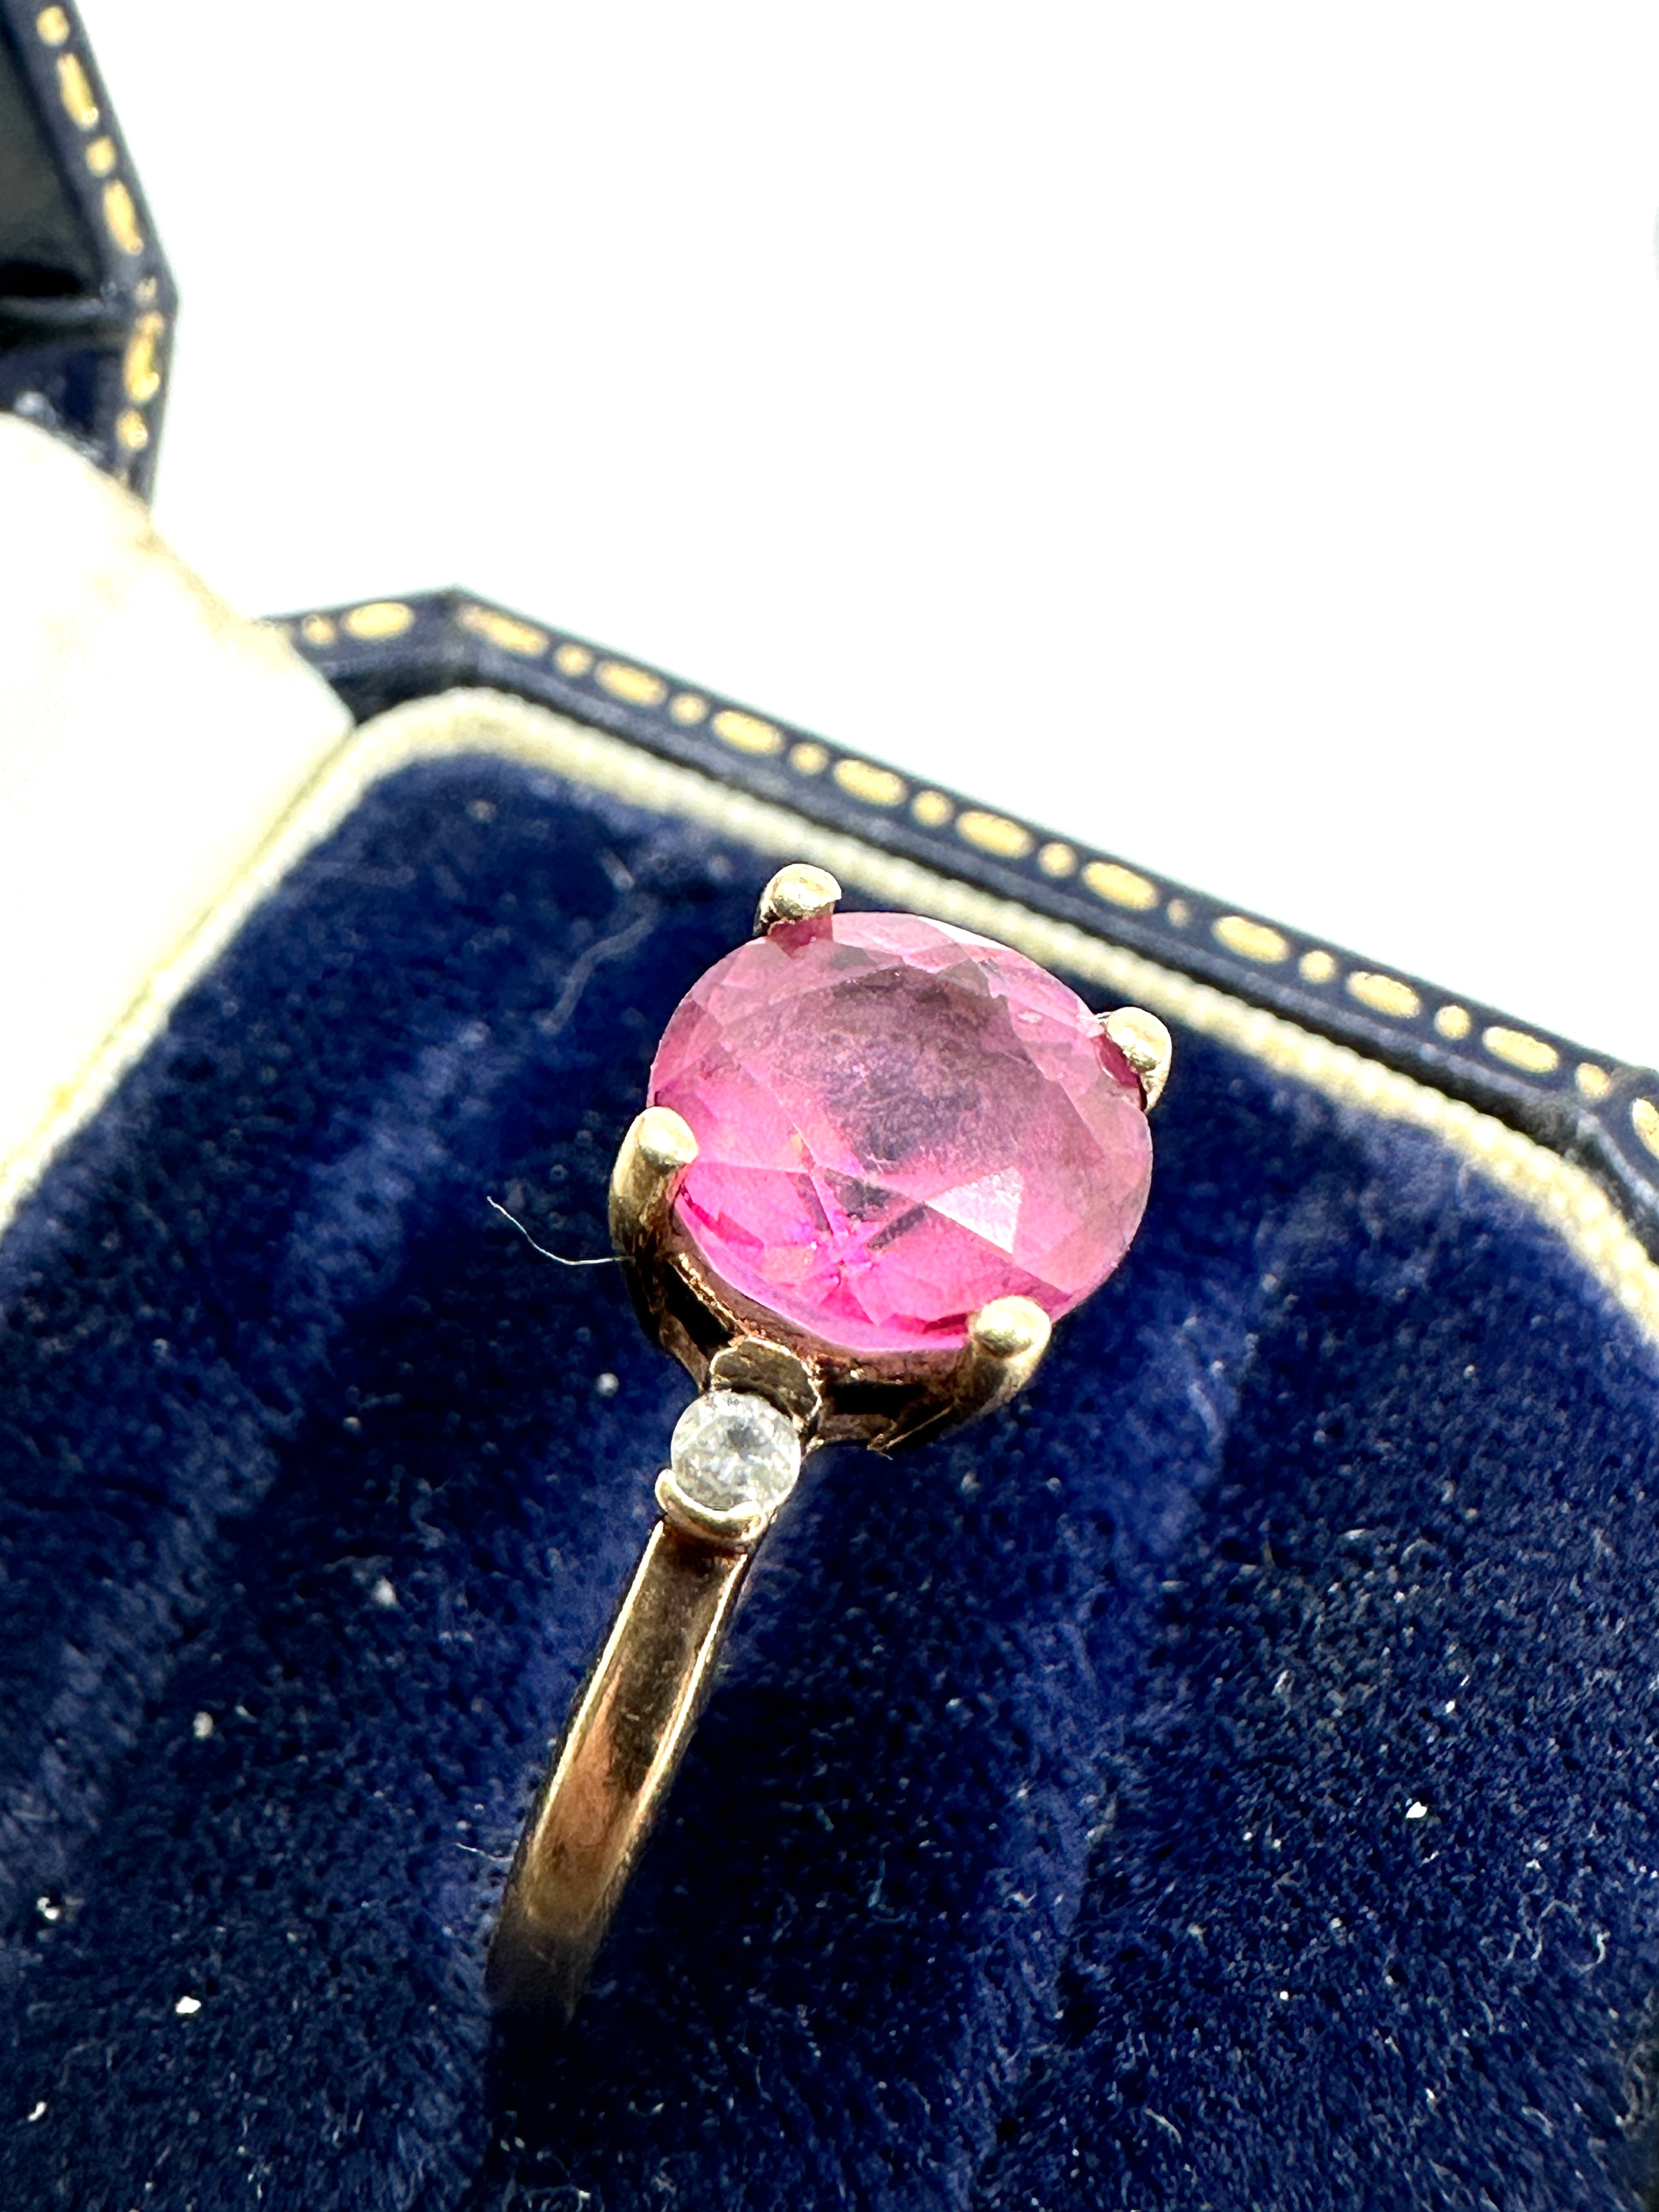 9ct gold diamond & pink gemstone ring weight 2.2g - Image 2 of 4